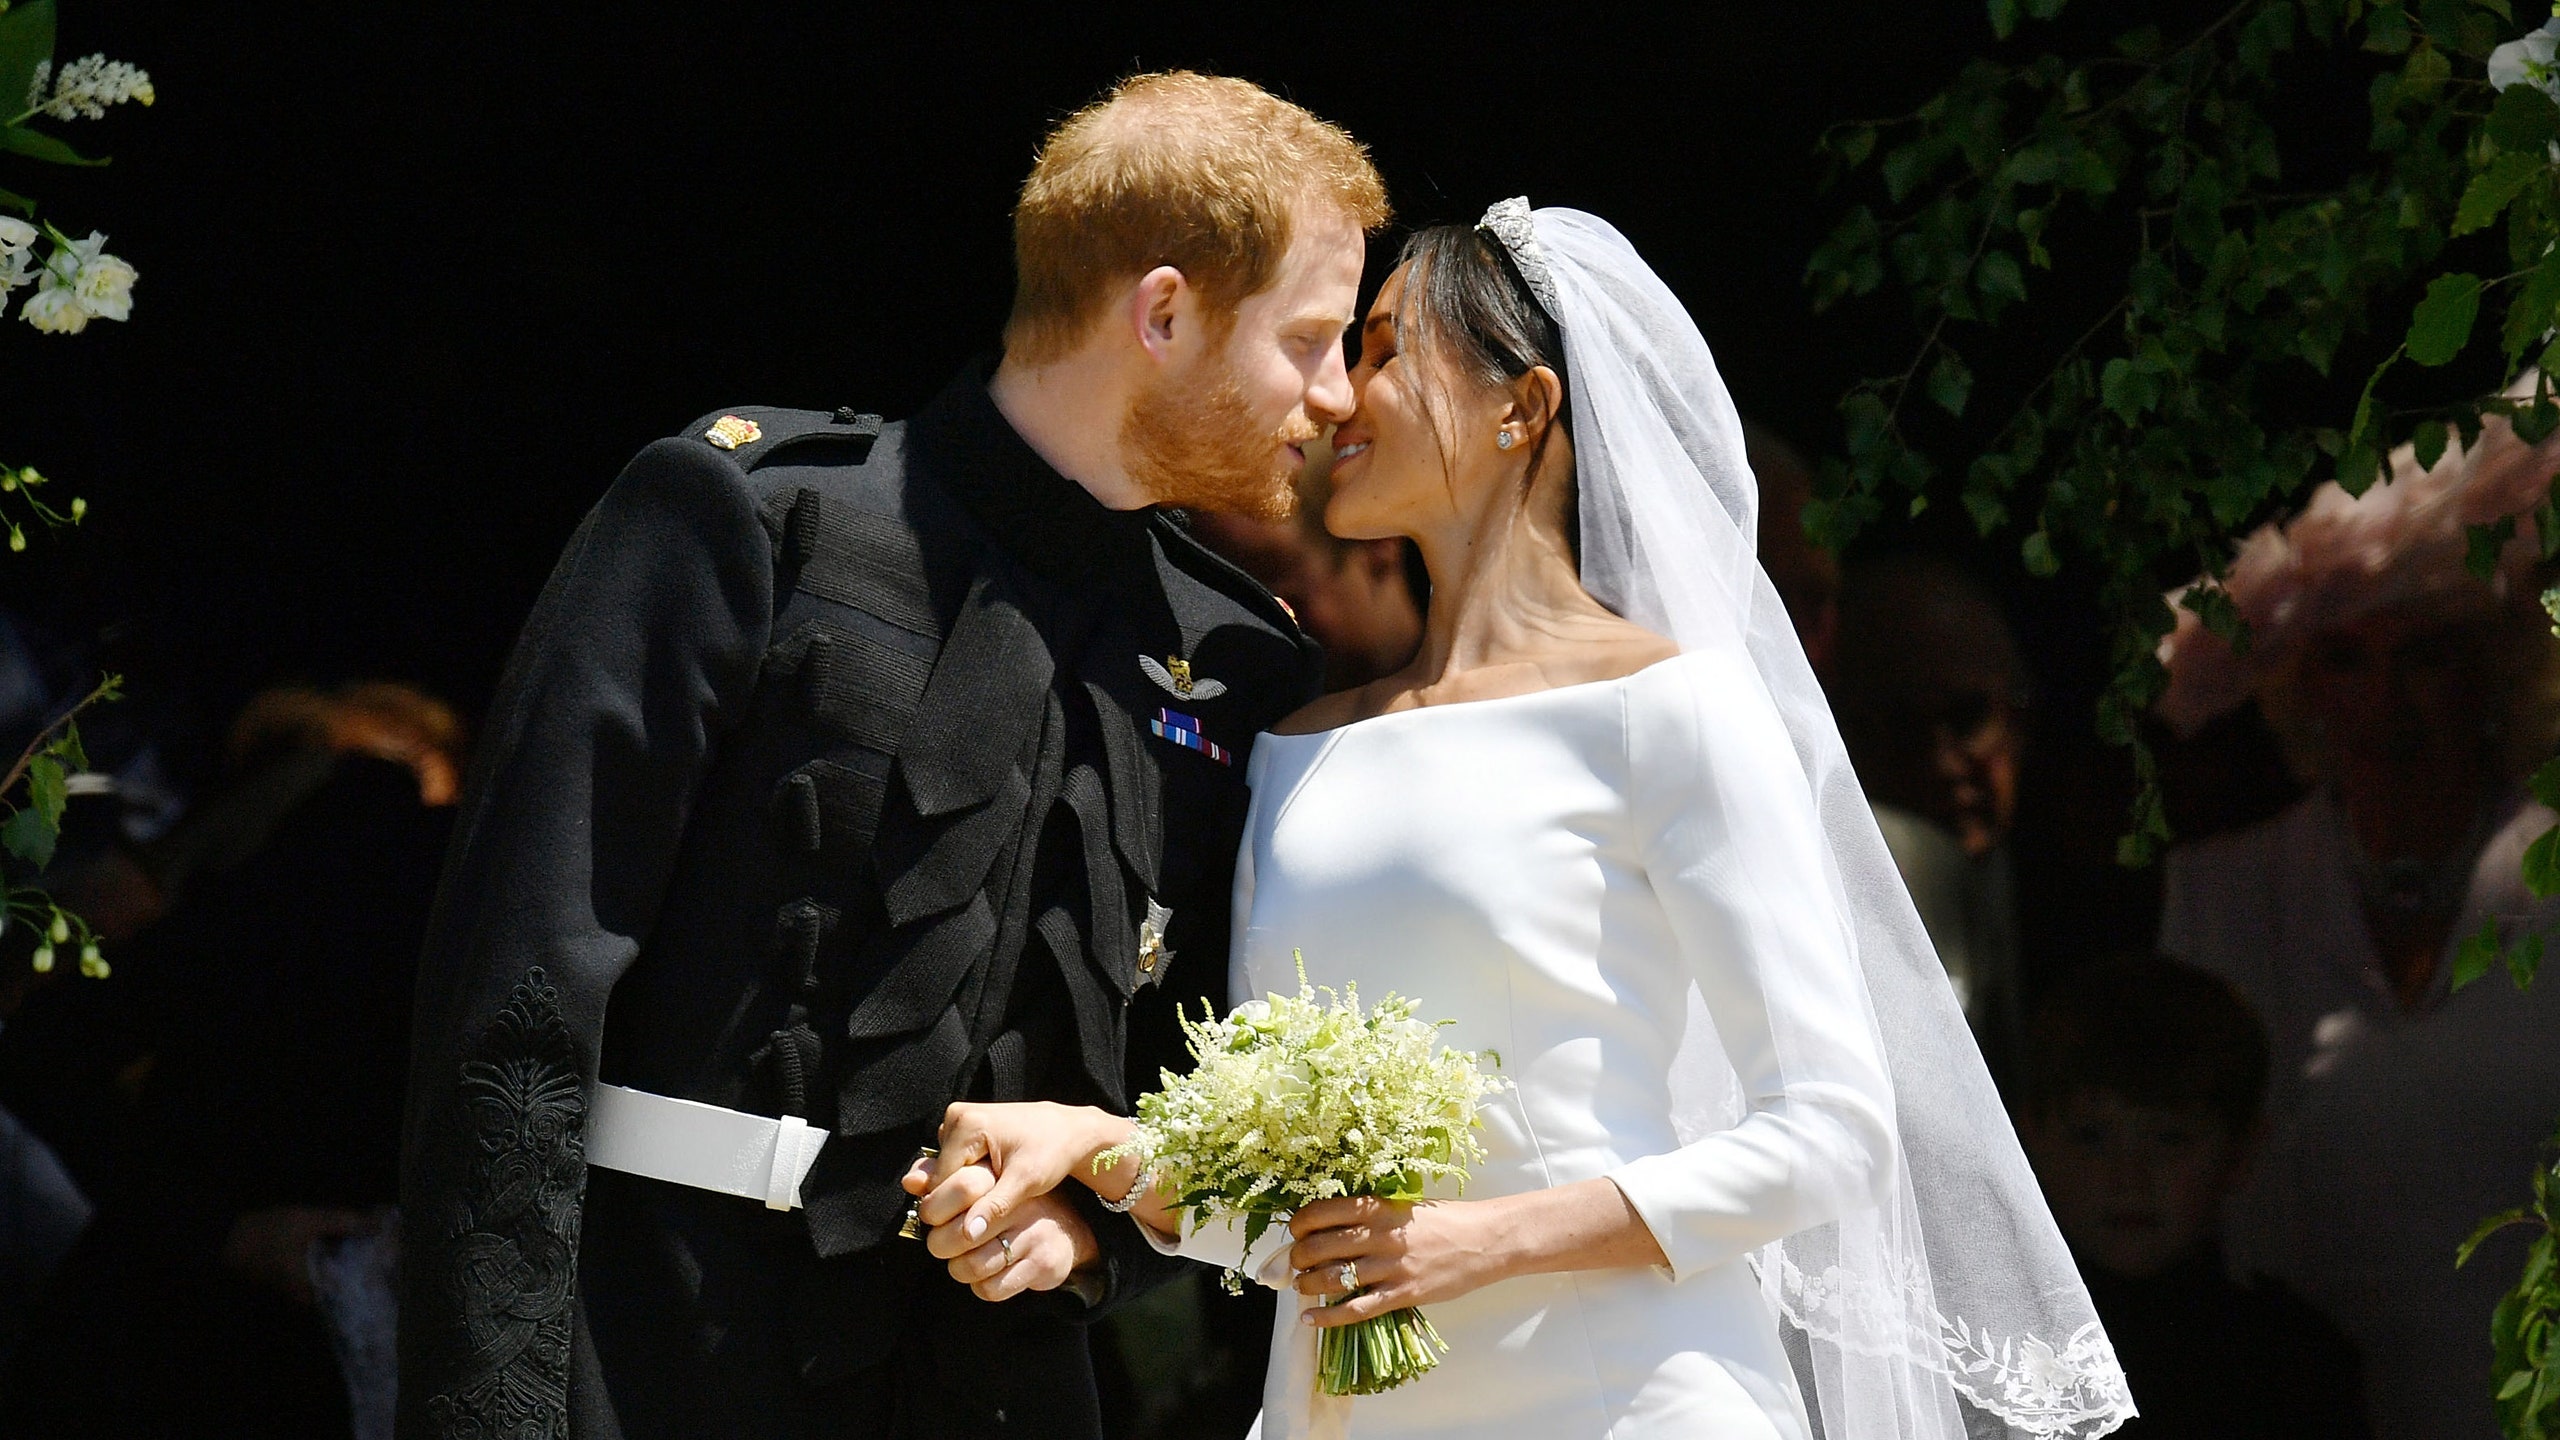 Свадьба принца Гарри и Меган Маркл фото и видео с официальной части церемонии